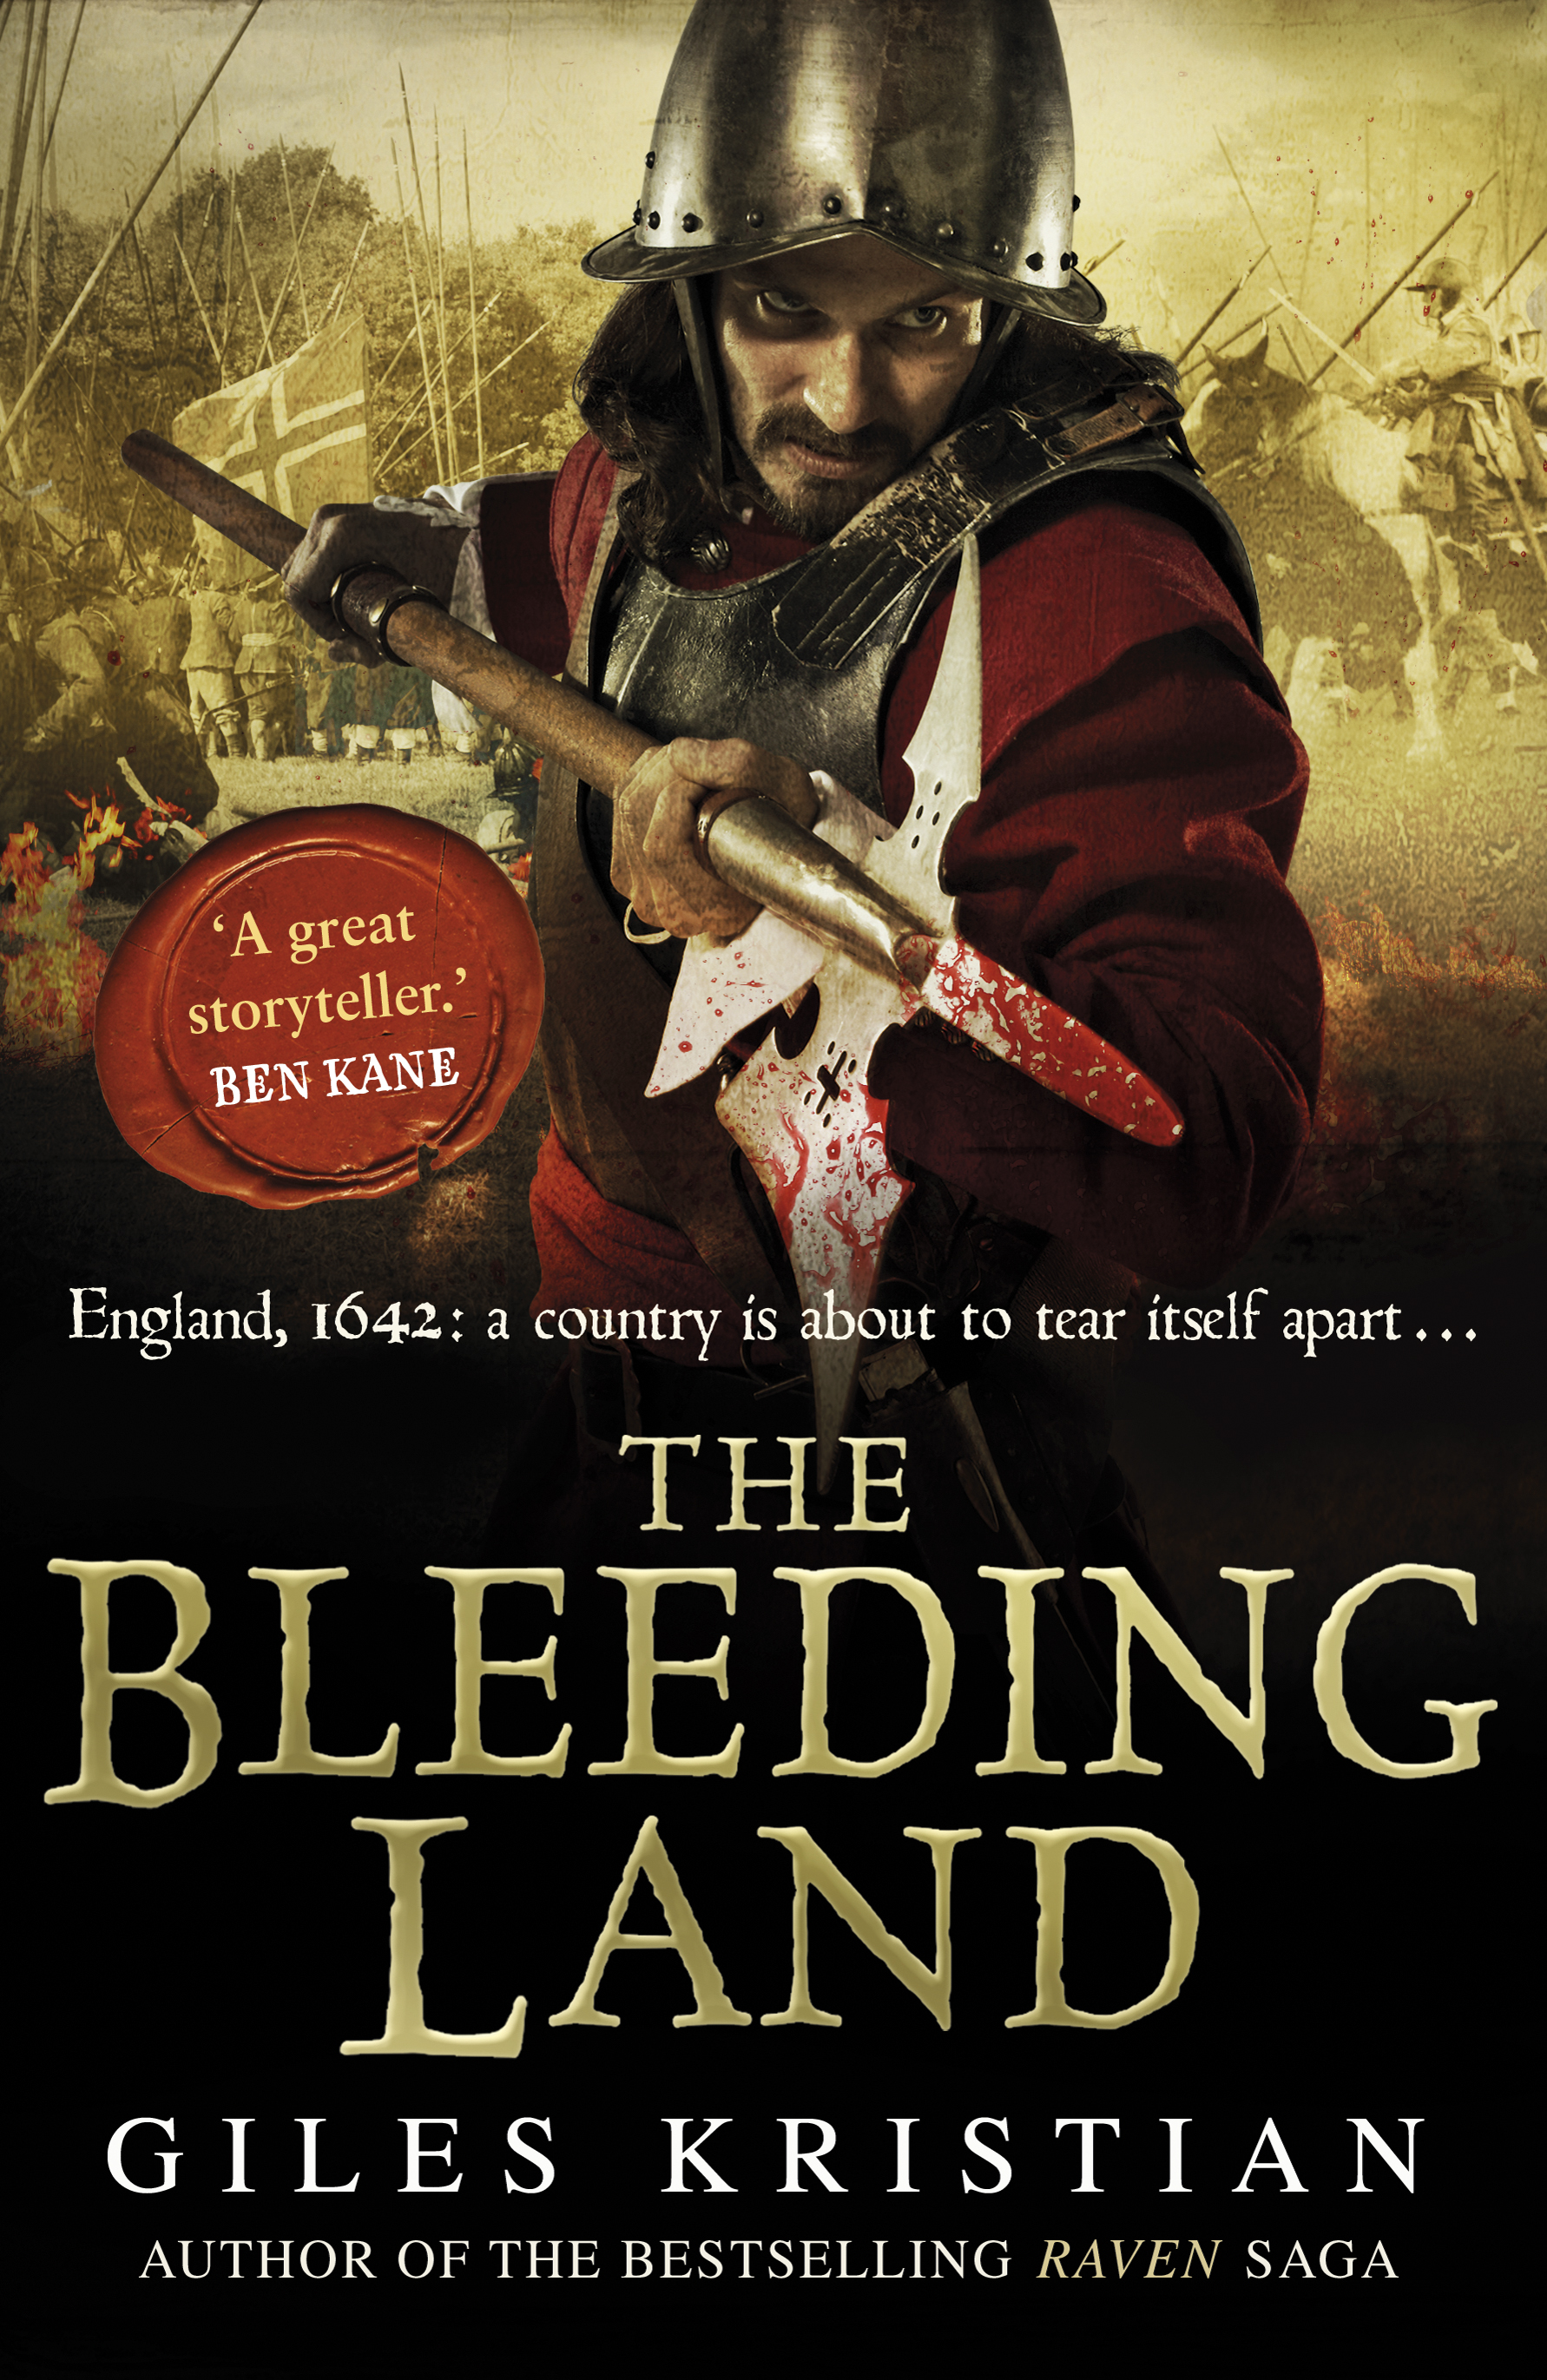 The Bleeding Land